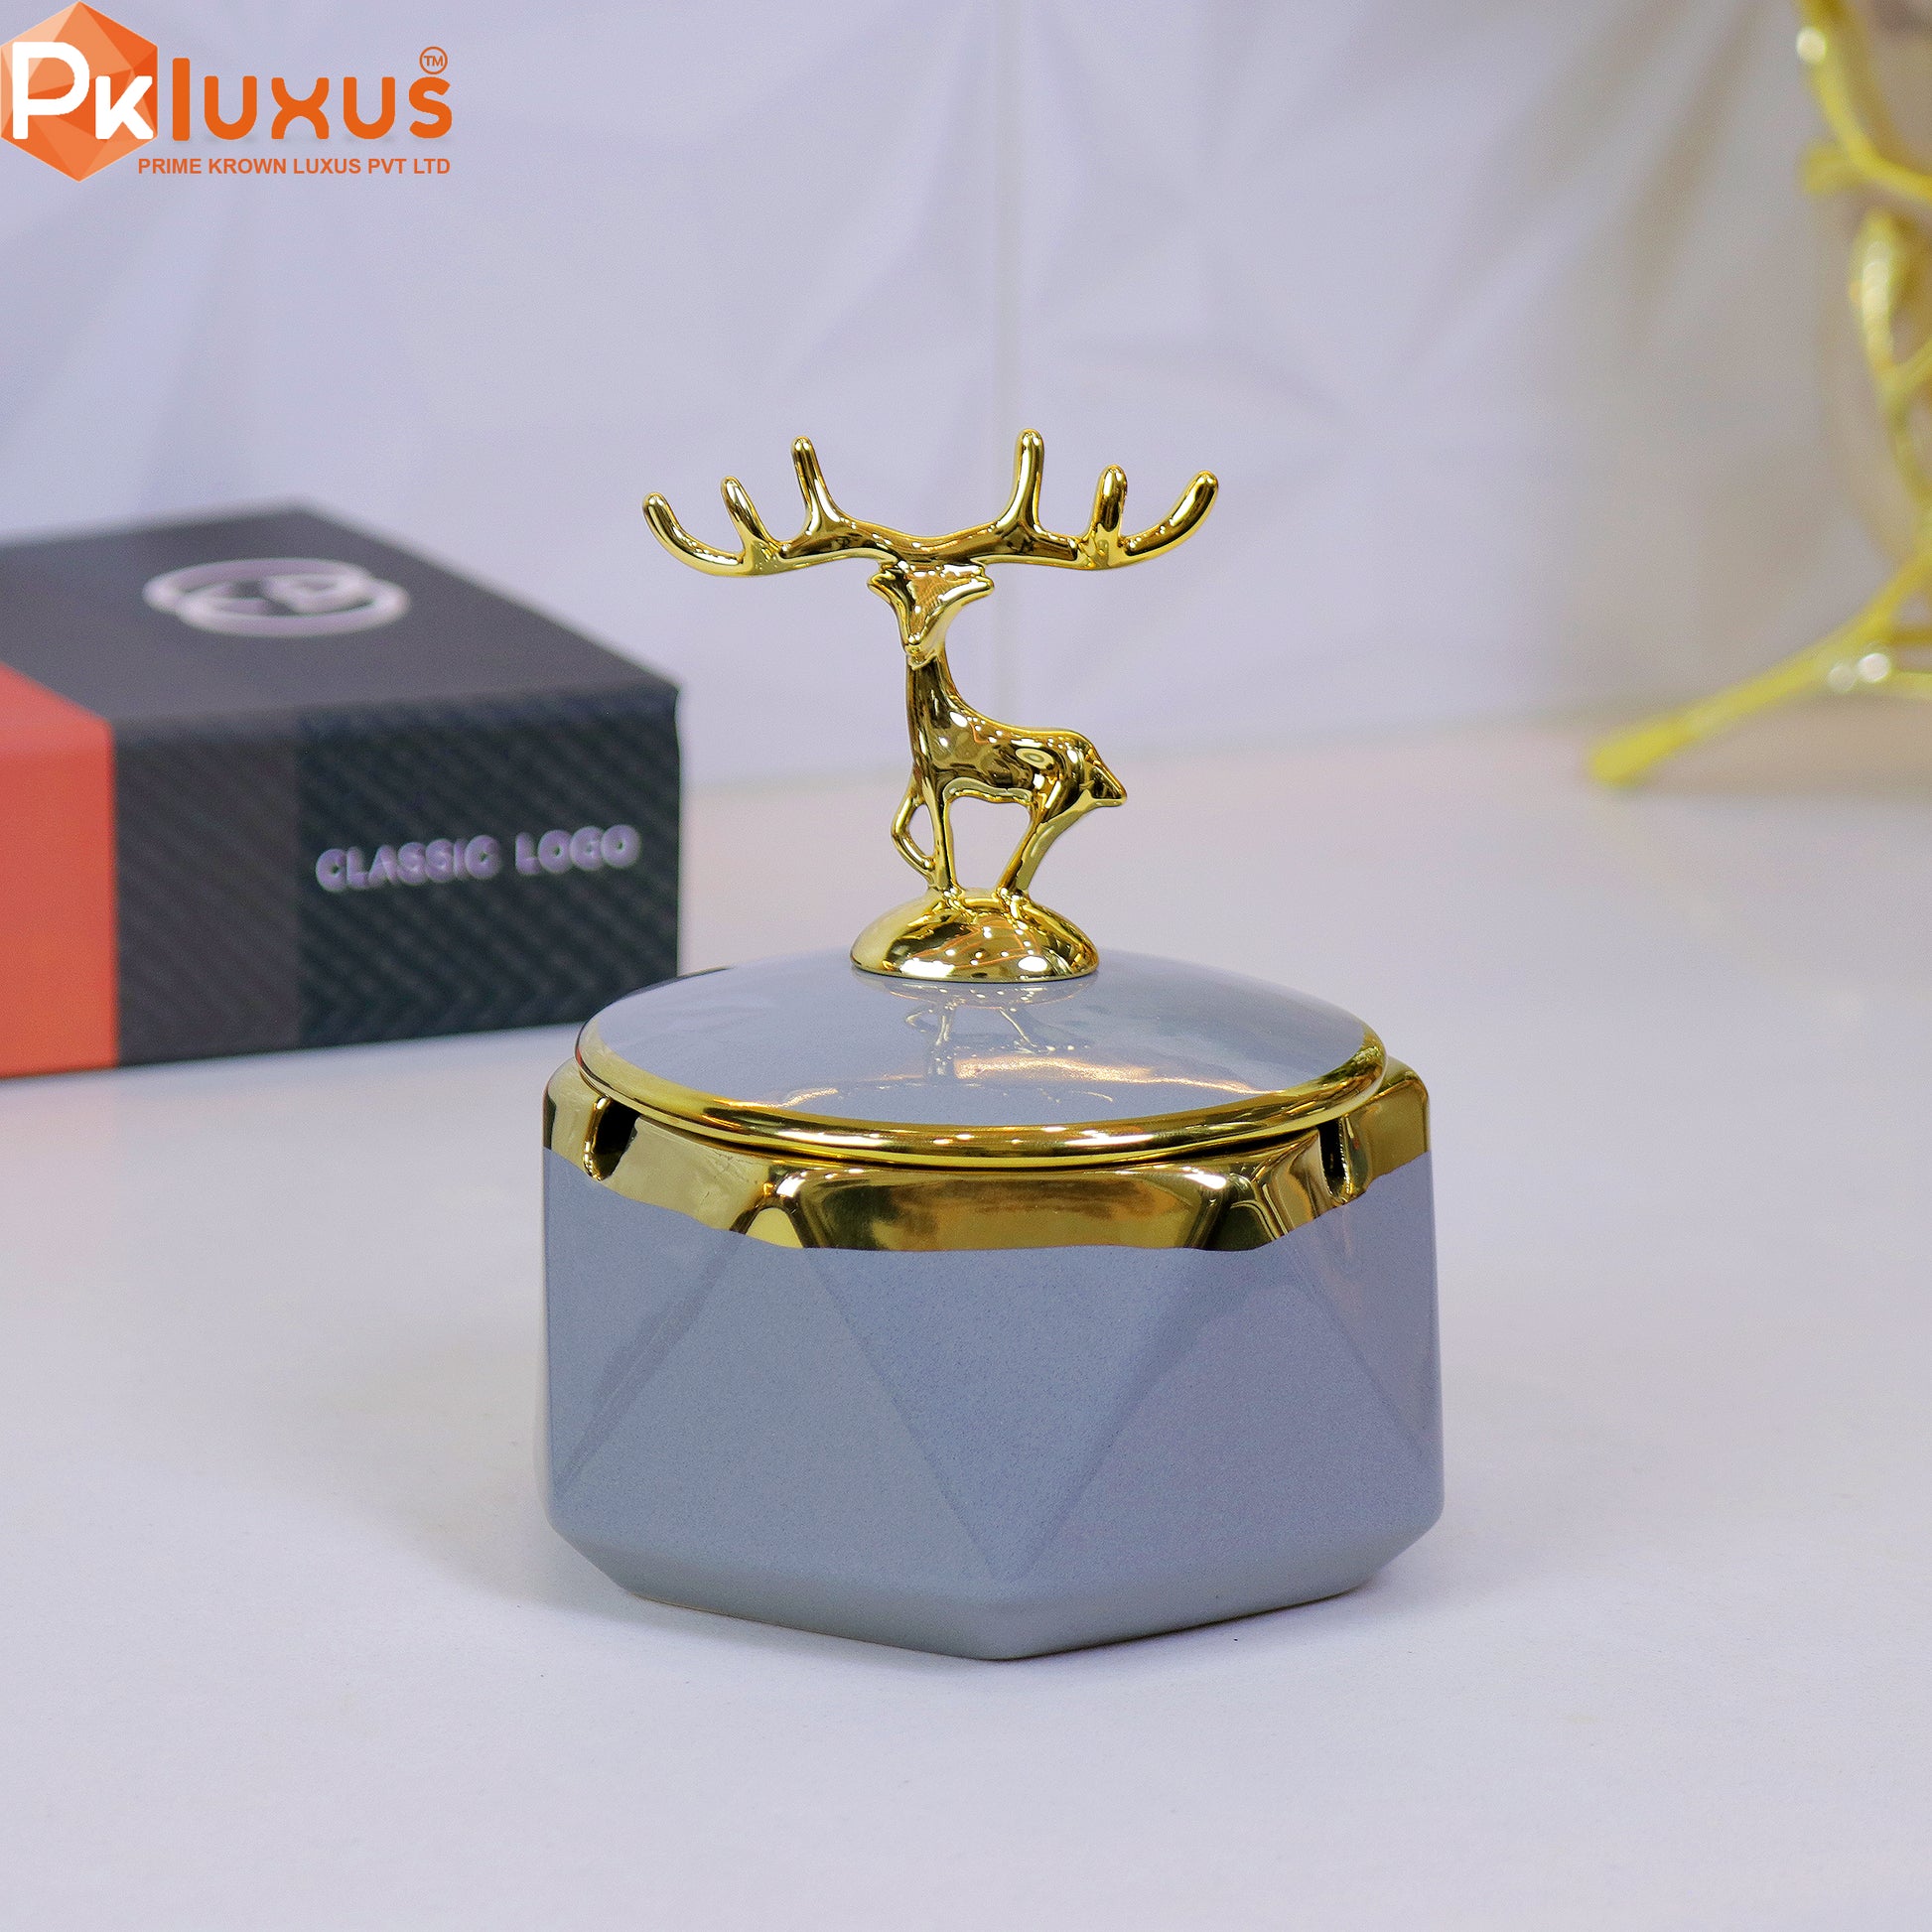 Luxury Gray & Golden Deer Ashtray With Lid By PK LUXUS™ - PK LUXUS